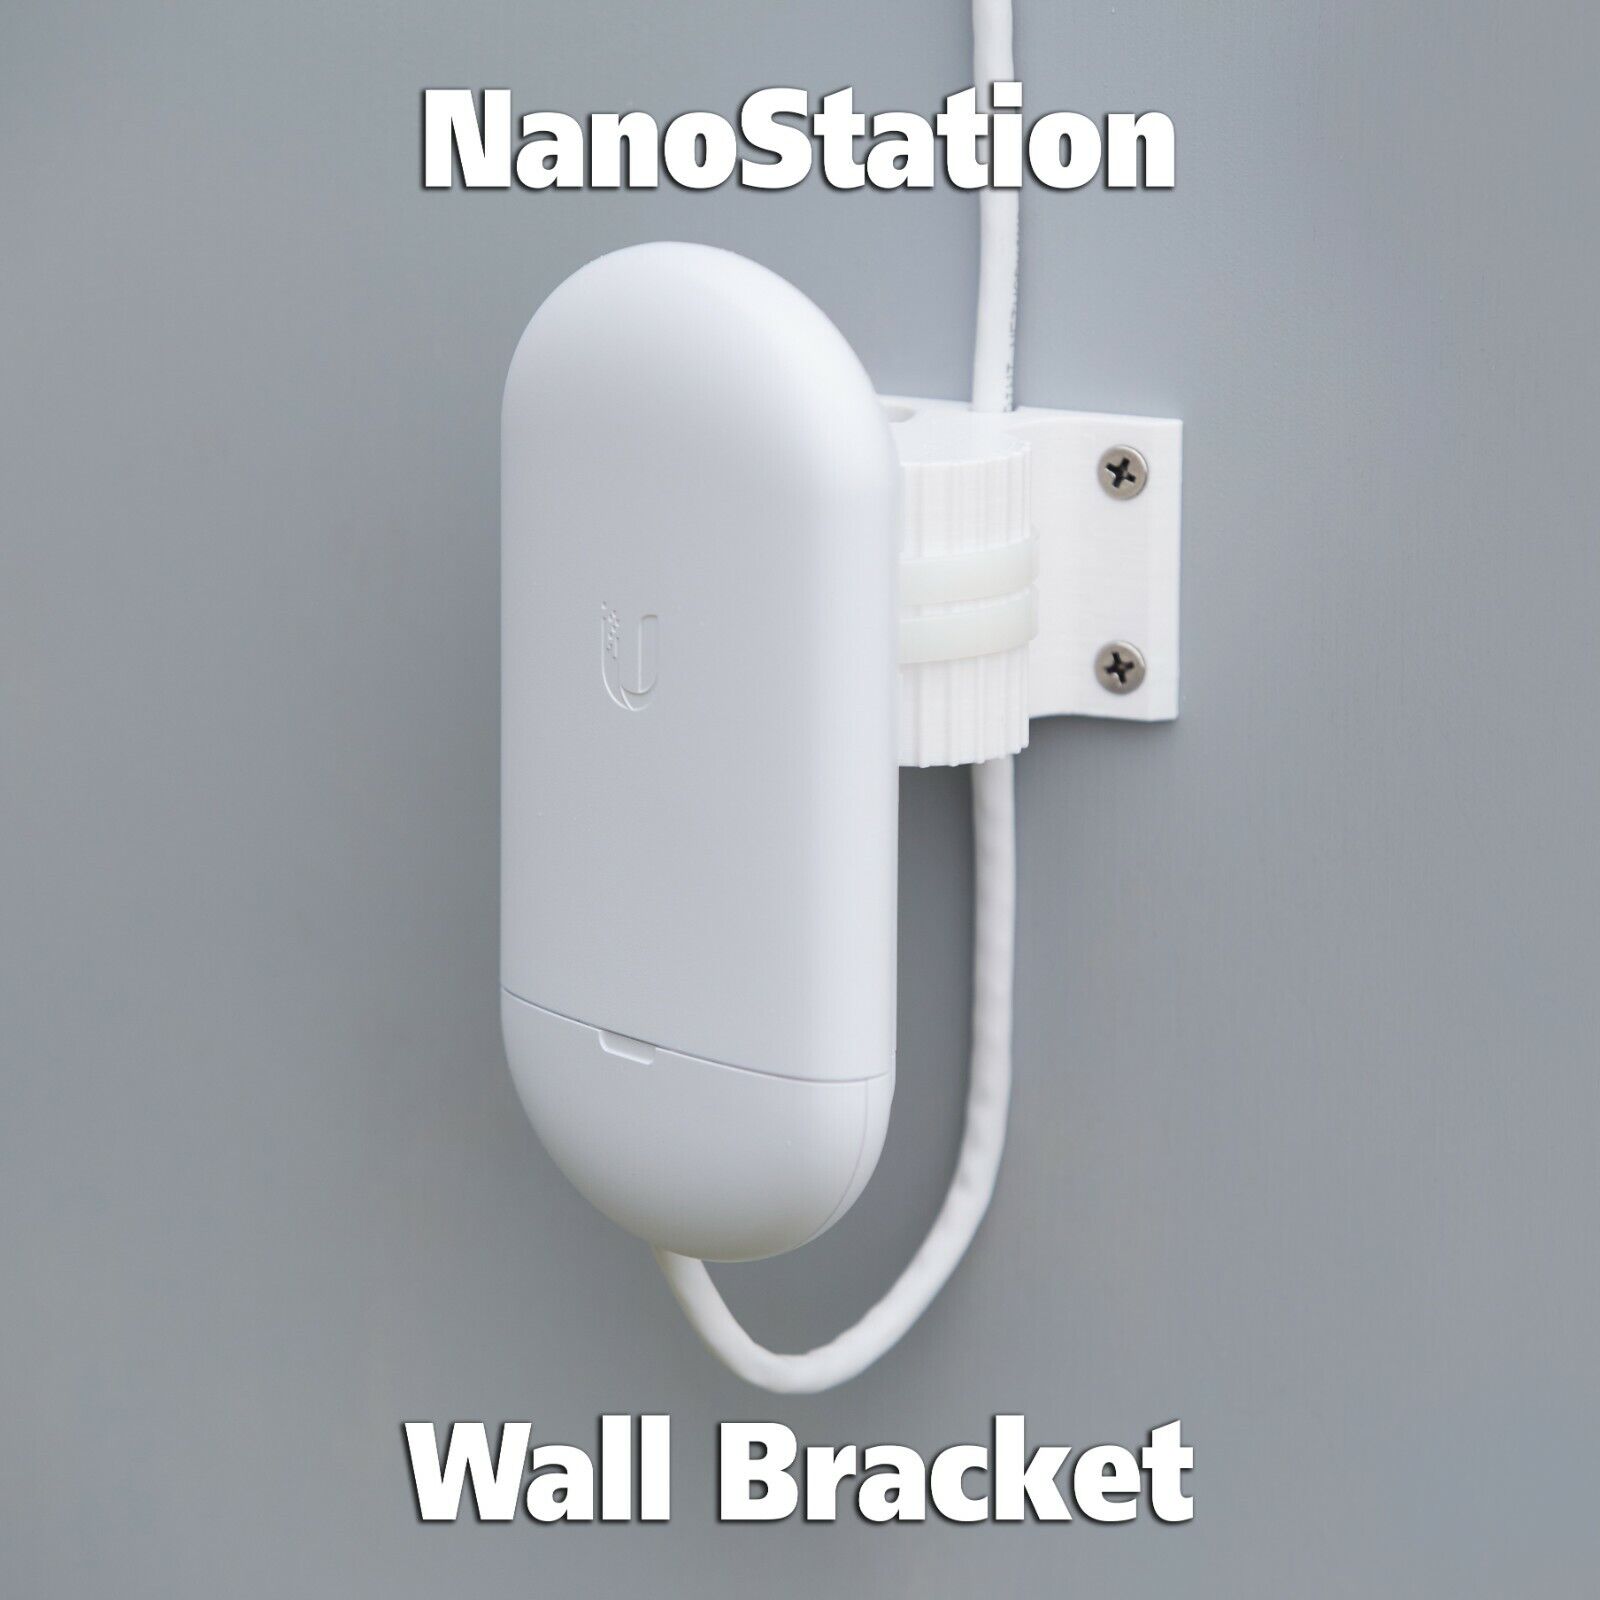 For Ubiquiti Nanostation Wall Bracket Loco5AC NS-5AC LocoM5 M5 NSM5 CPE Bridge